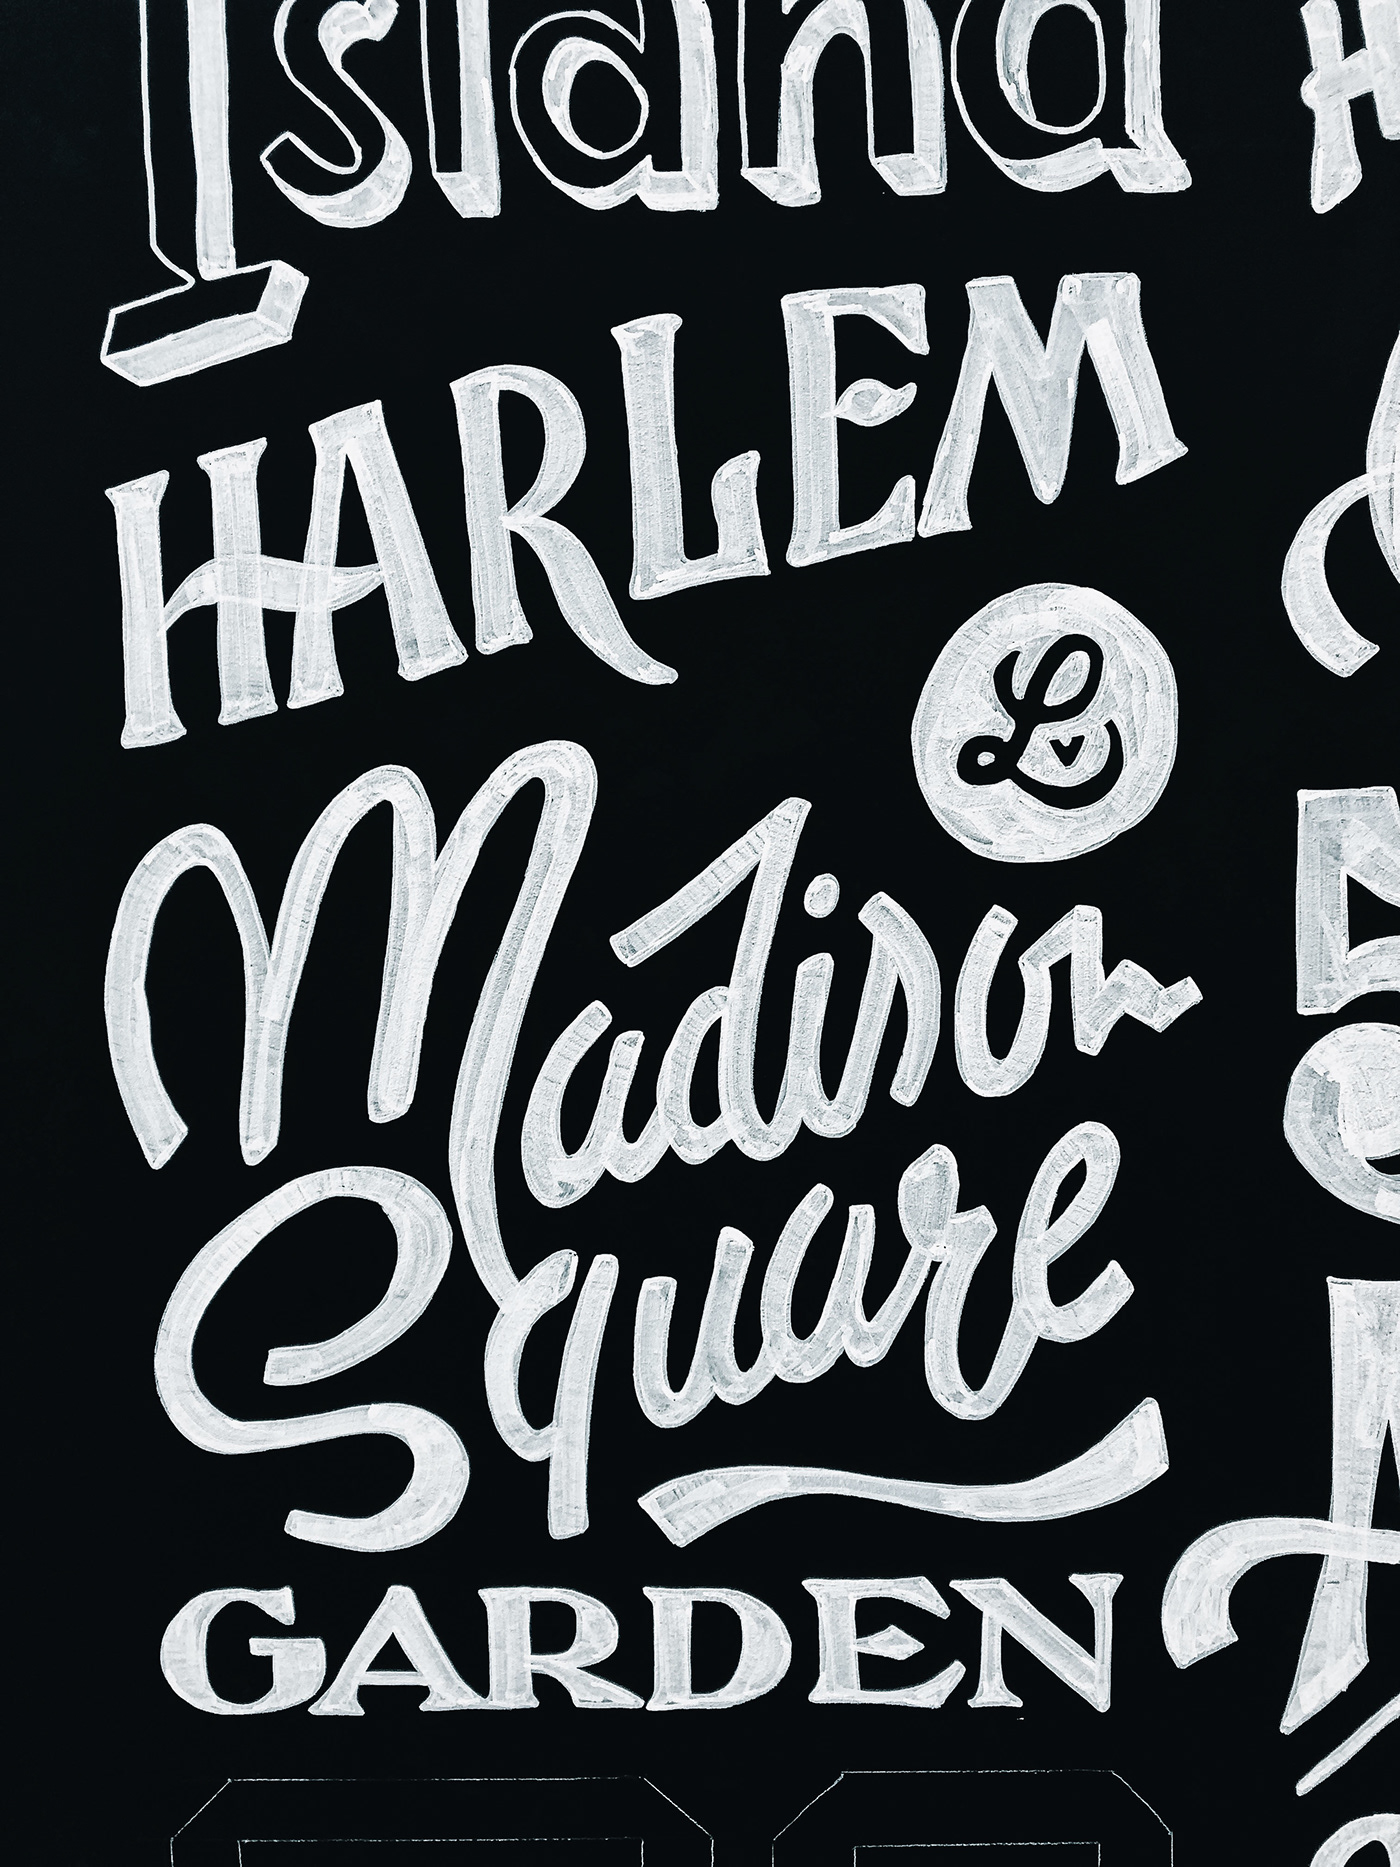 Cadillac Mural & Typographic Illustration by Mark van Leeuwen